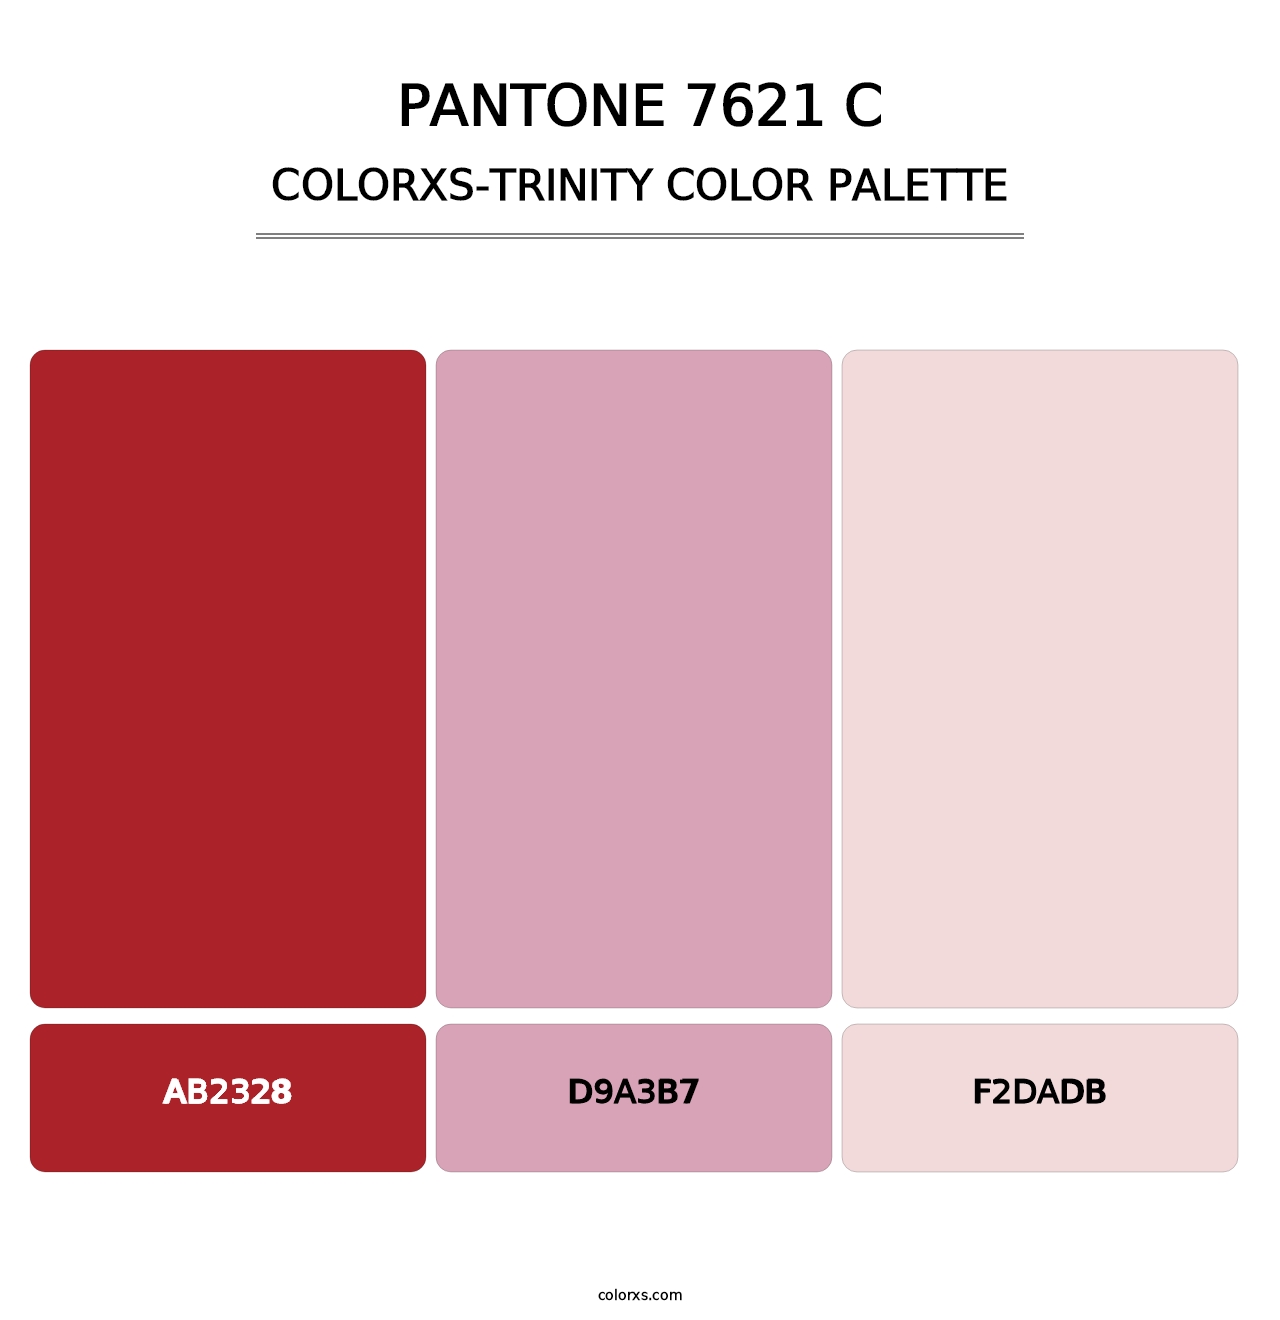 PANTONE 7621 C - Colorxs Trinity Palette